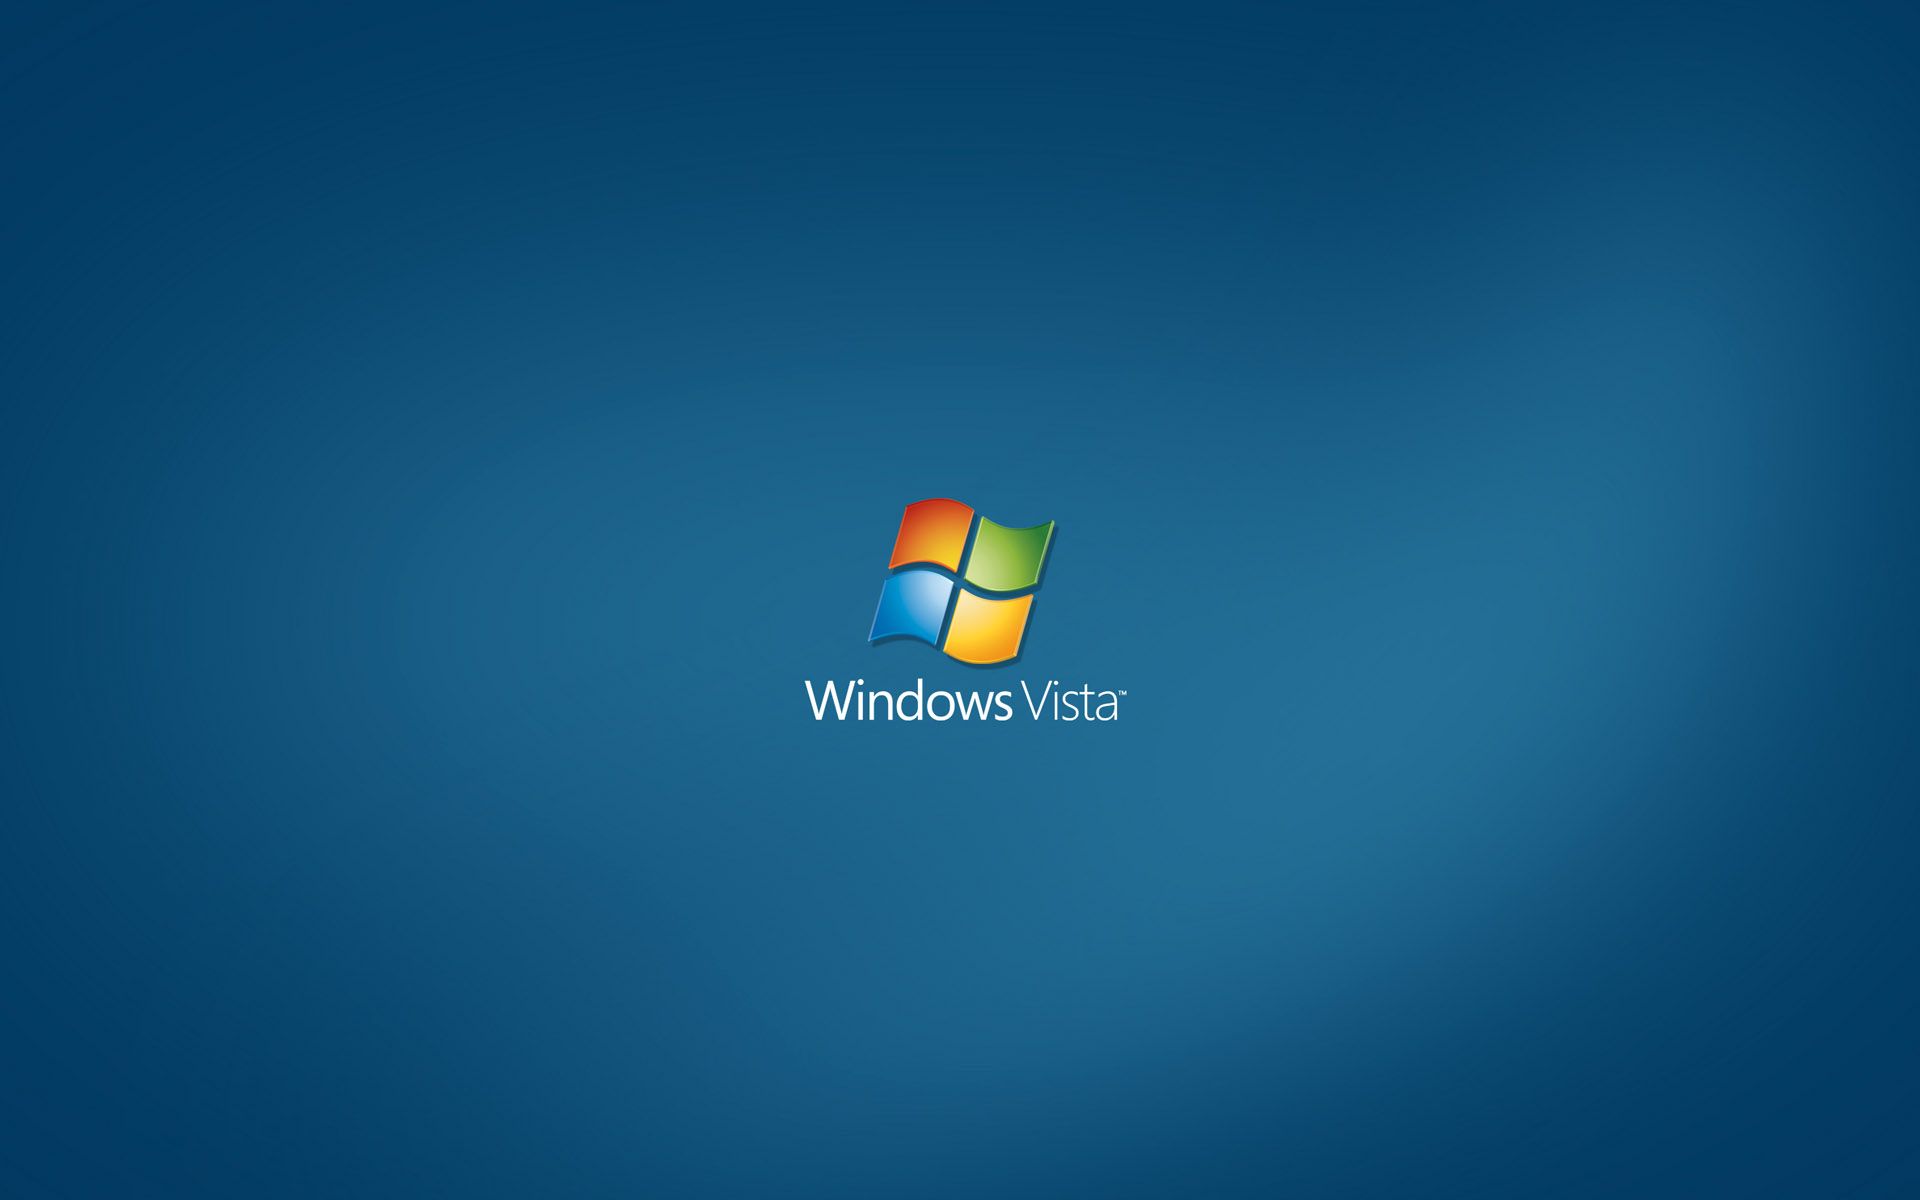 Windows Vista Wallpapers HD 1920 X 1200 - Photo 55 of 118 | phombo.com